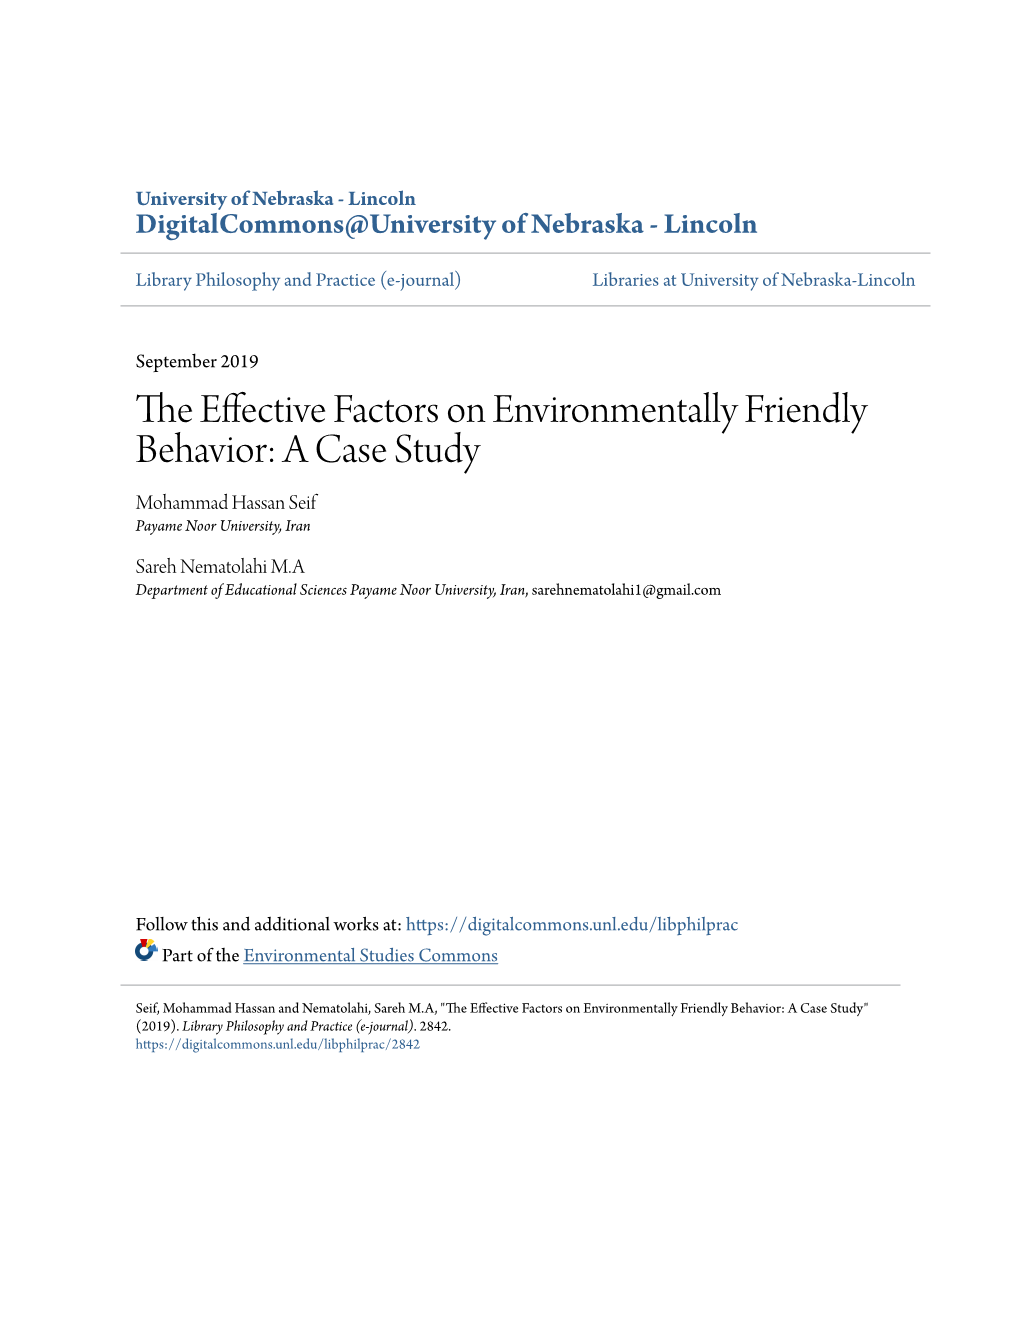 The Effective Factors on Environmentally Friendly Behavior: a Case Study" (2019)